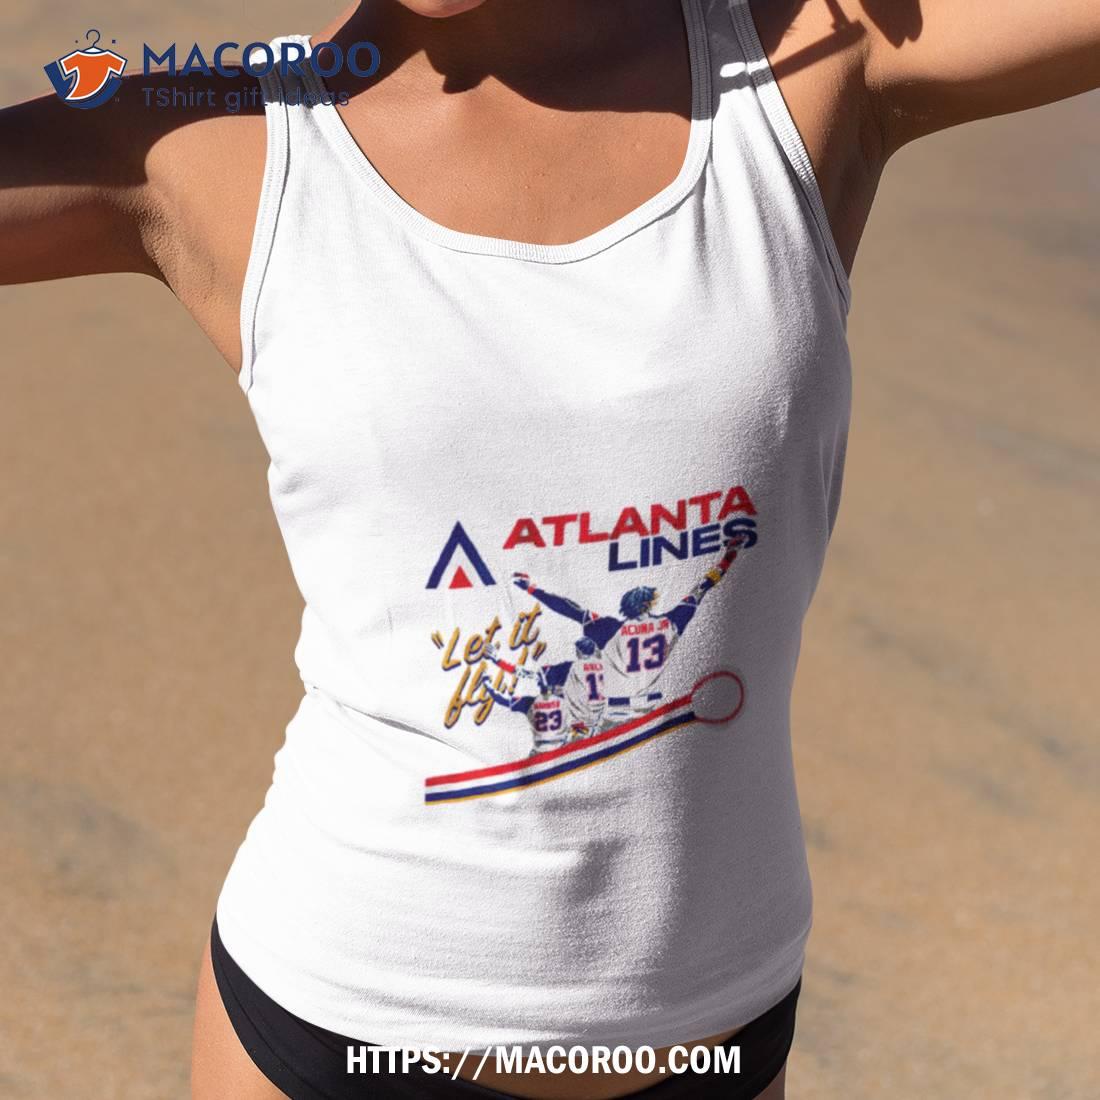 Atlanta Airlines Let It Fly Shirt Tank Top 2